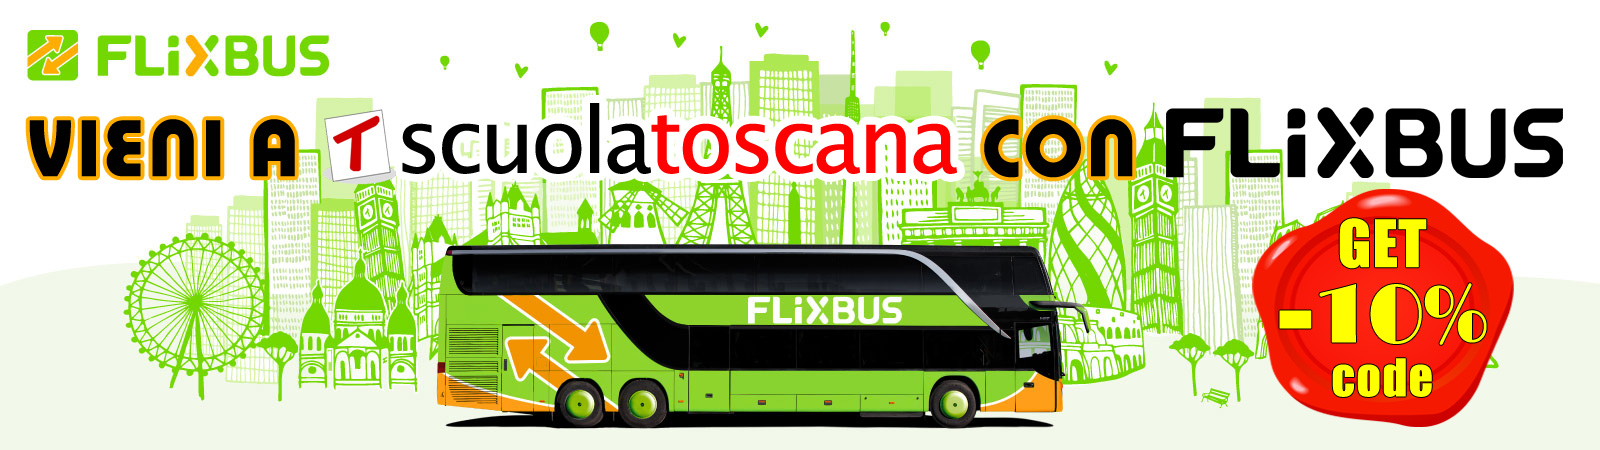 Vieni a Scuola Toscana con FlixBus